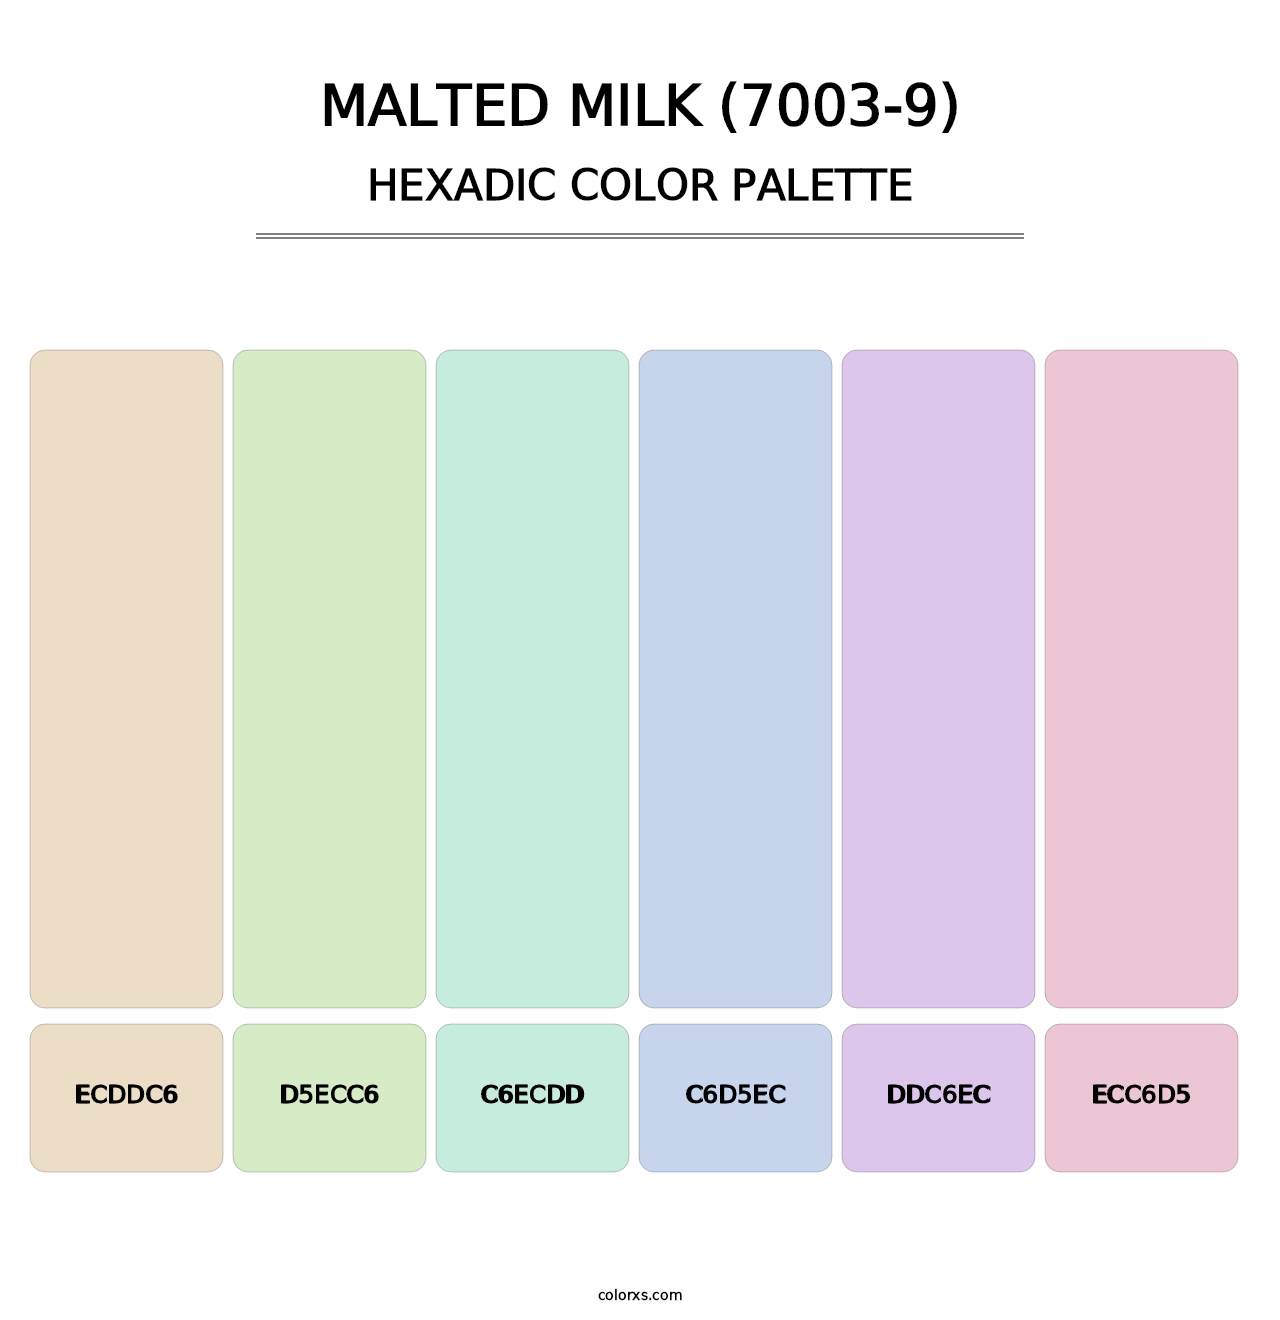 Malted Milk (7003-9) - Hexadic Color Palette